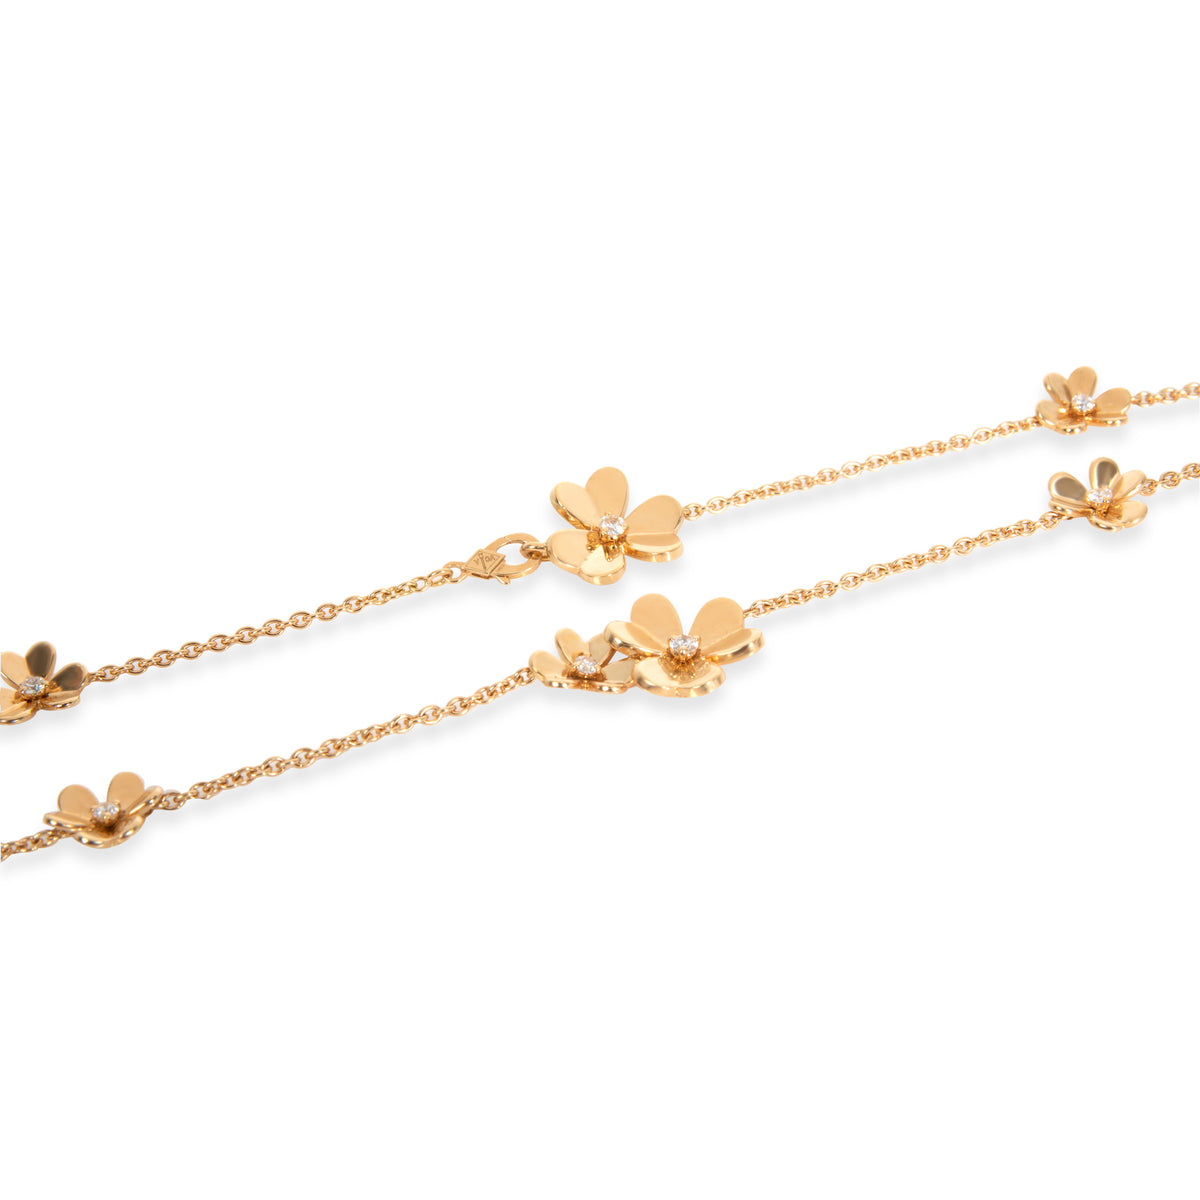 Van Cleef & Arpels Frivole 9 Flowers Diamond Necklace in 18K Yellow Gold 0.61ctw